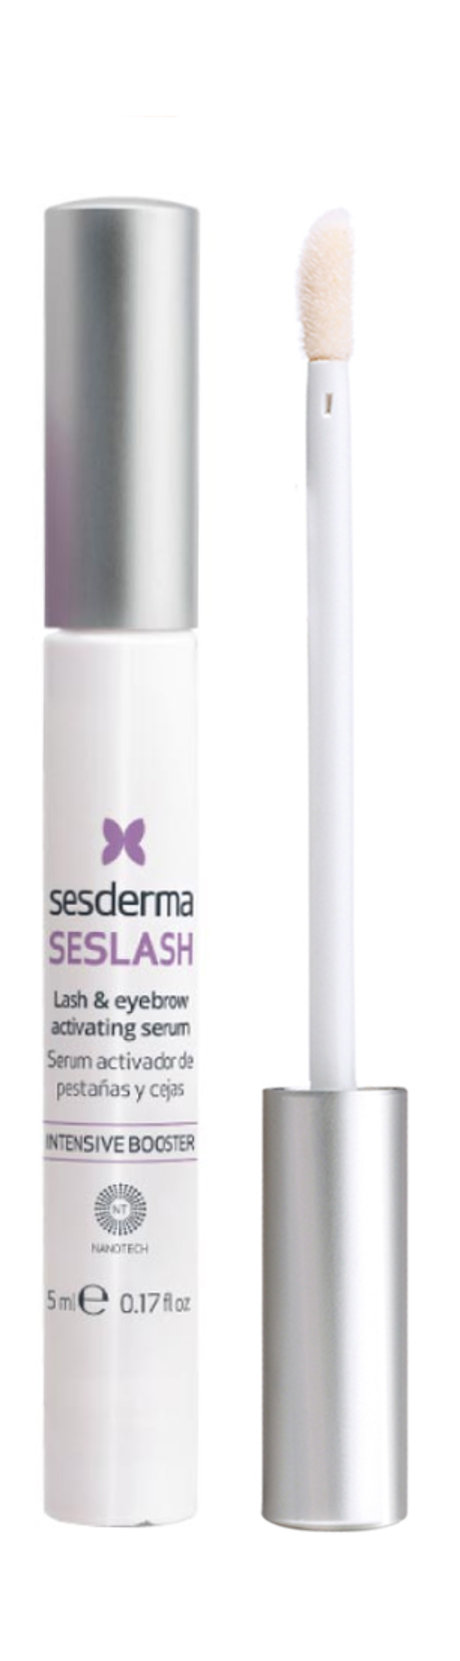 sesderma seslash lash and eyebrow growth booster